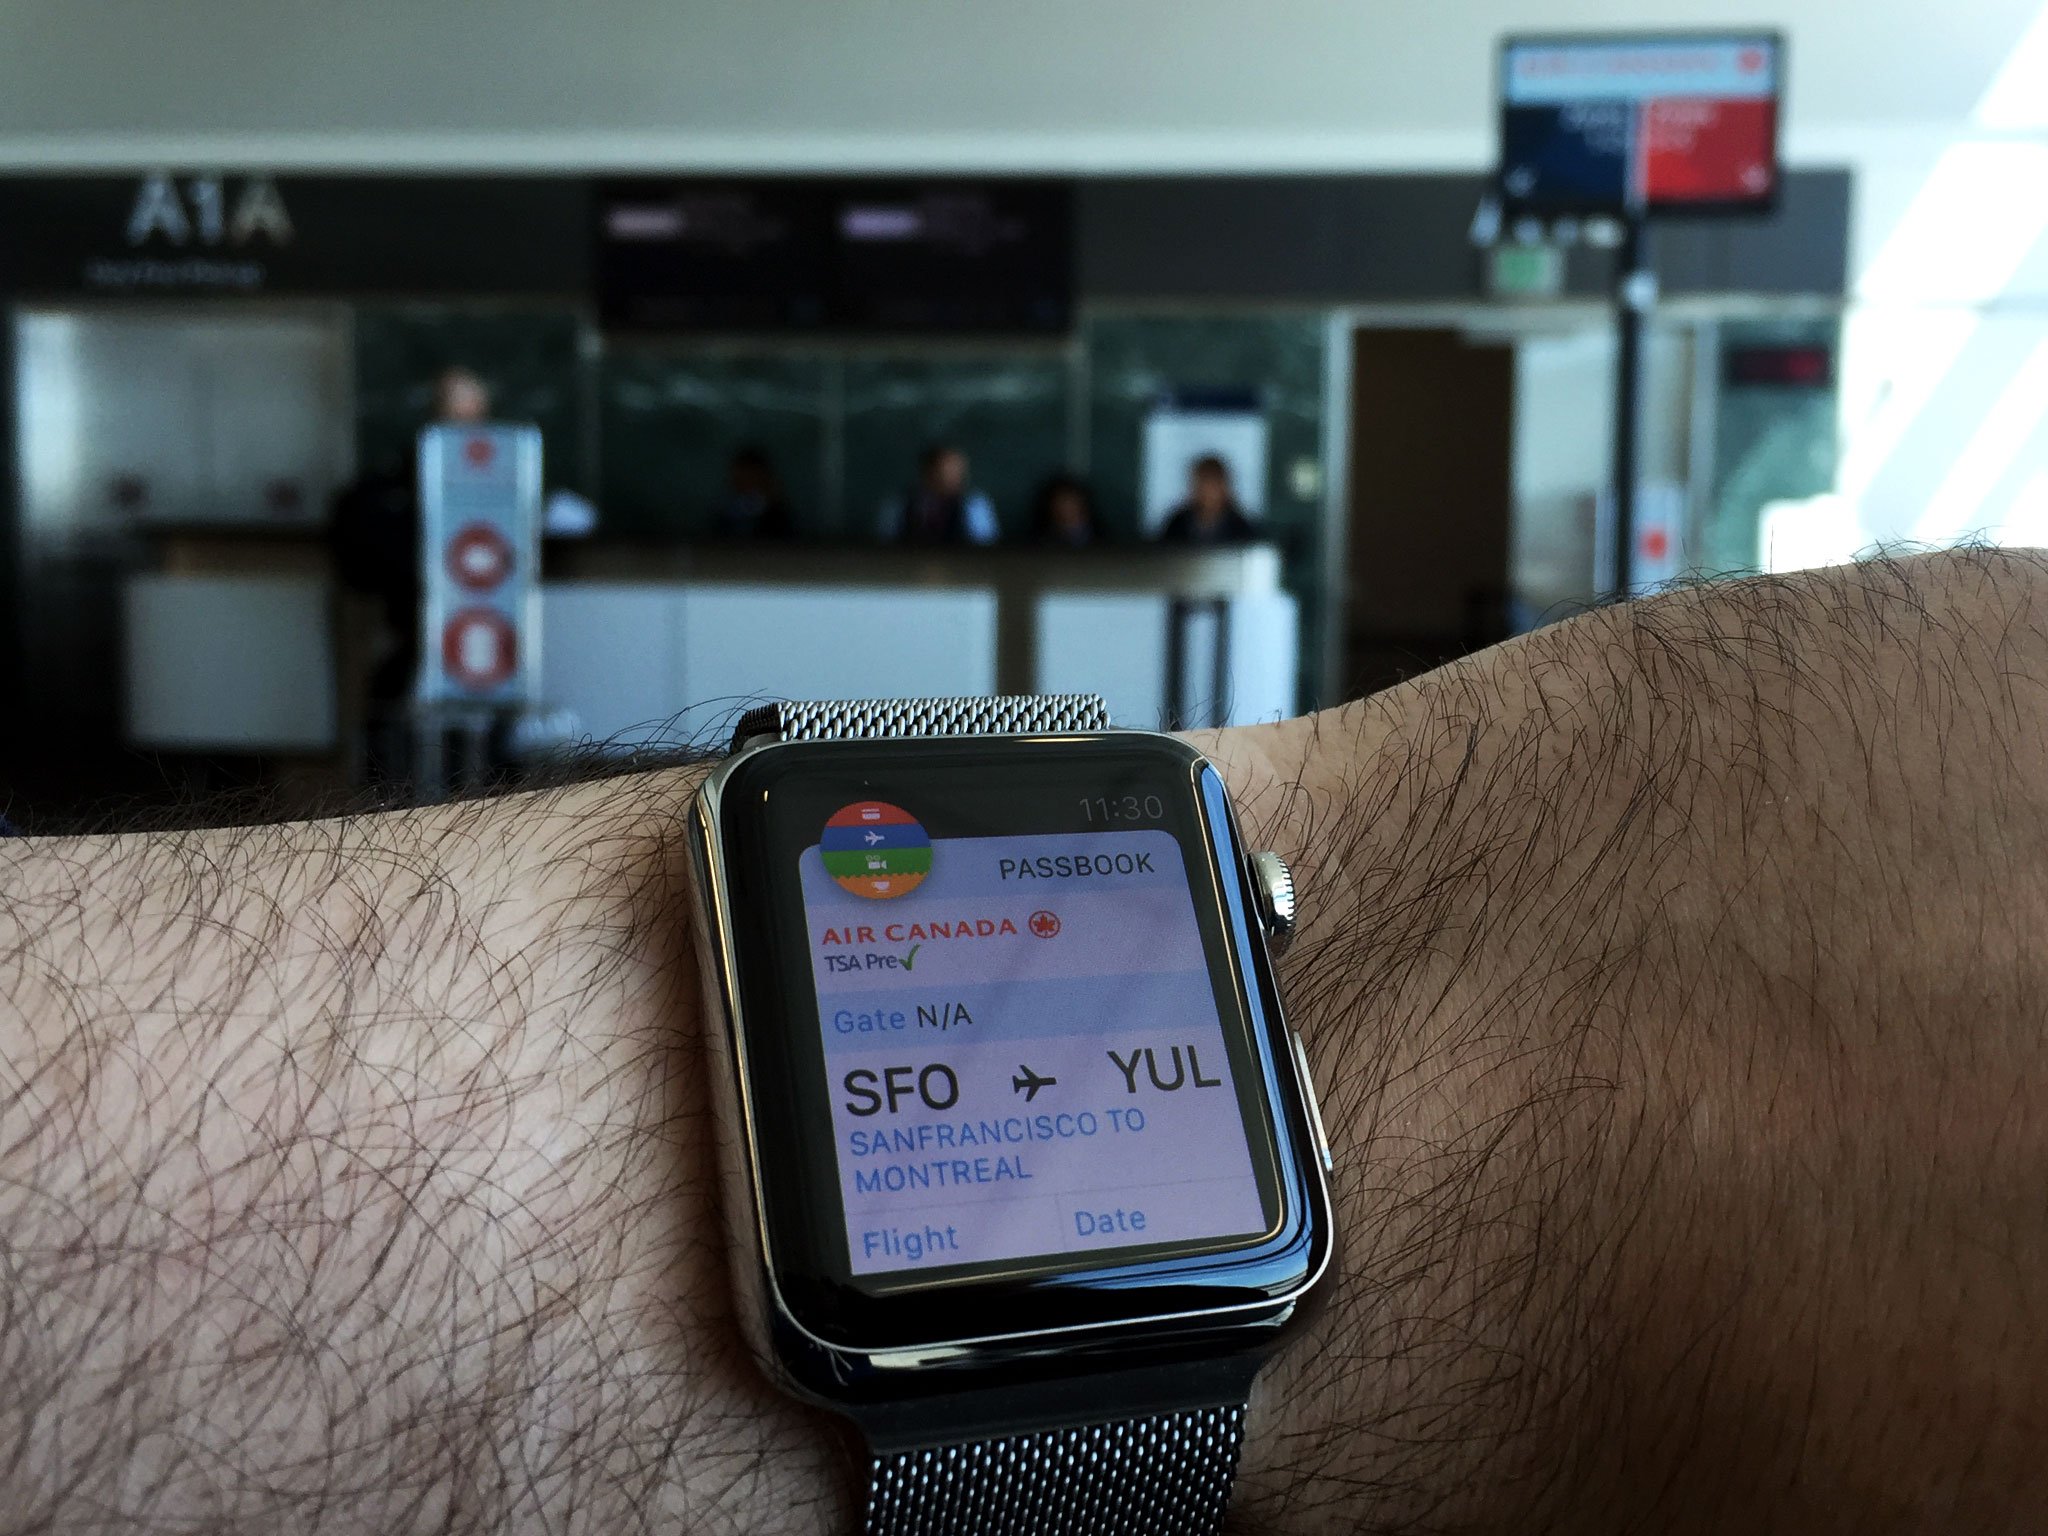 Air Canada boarding pass on Apple Watch Passbook